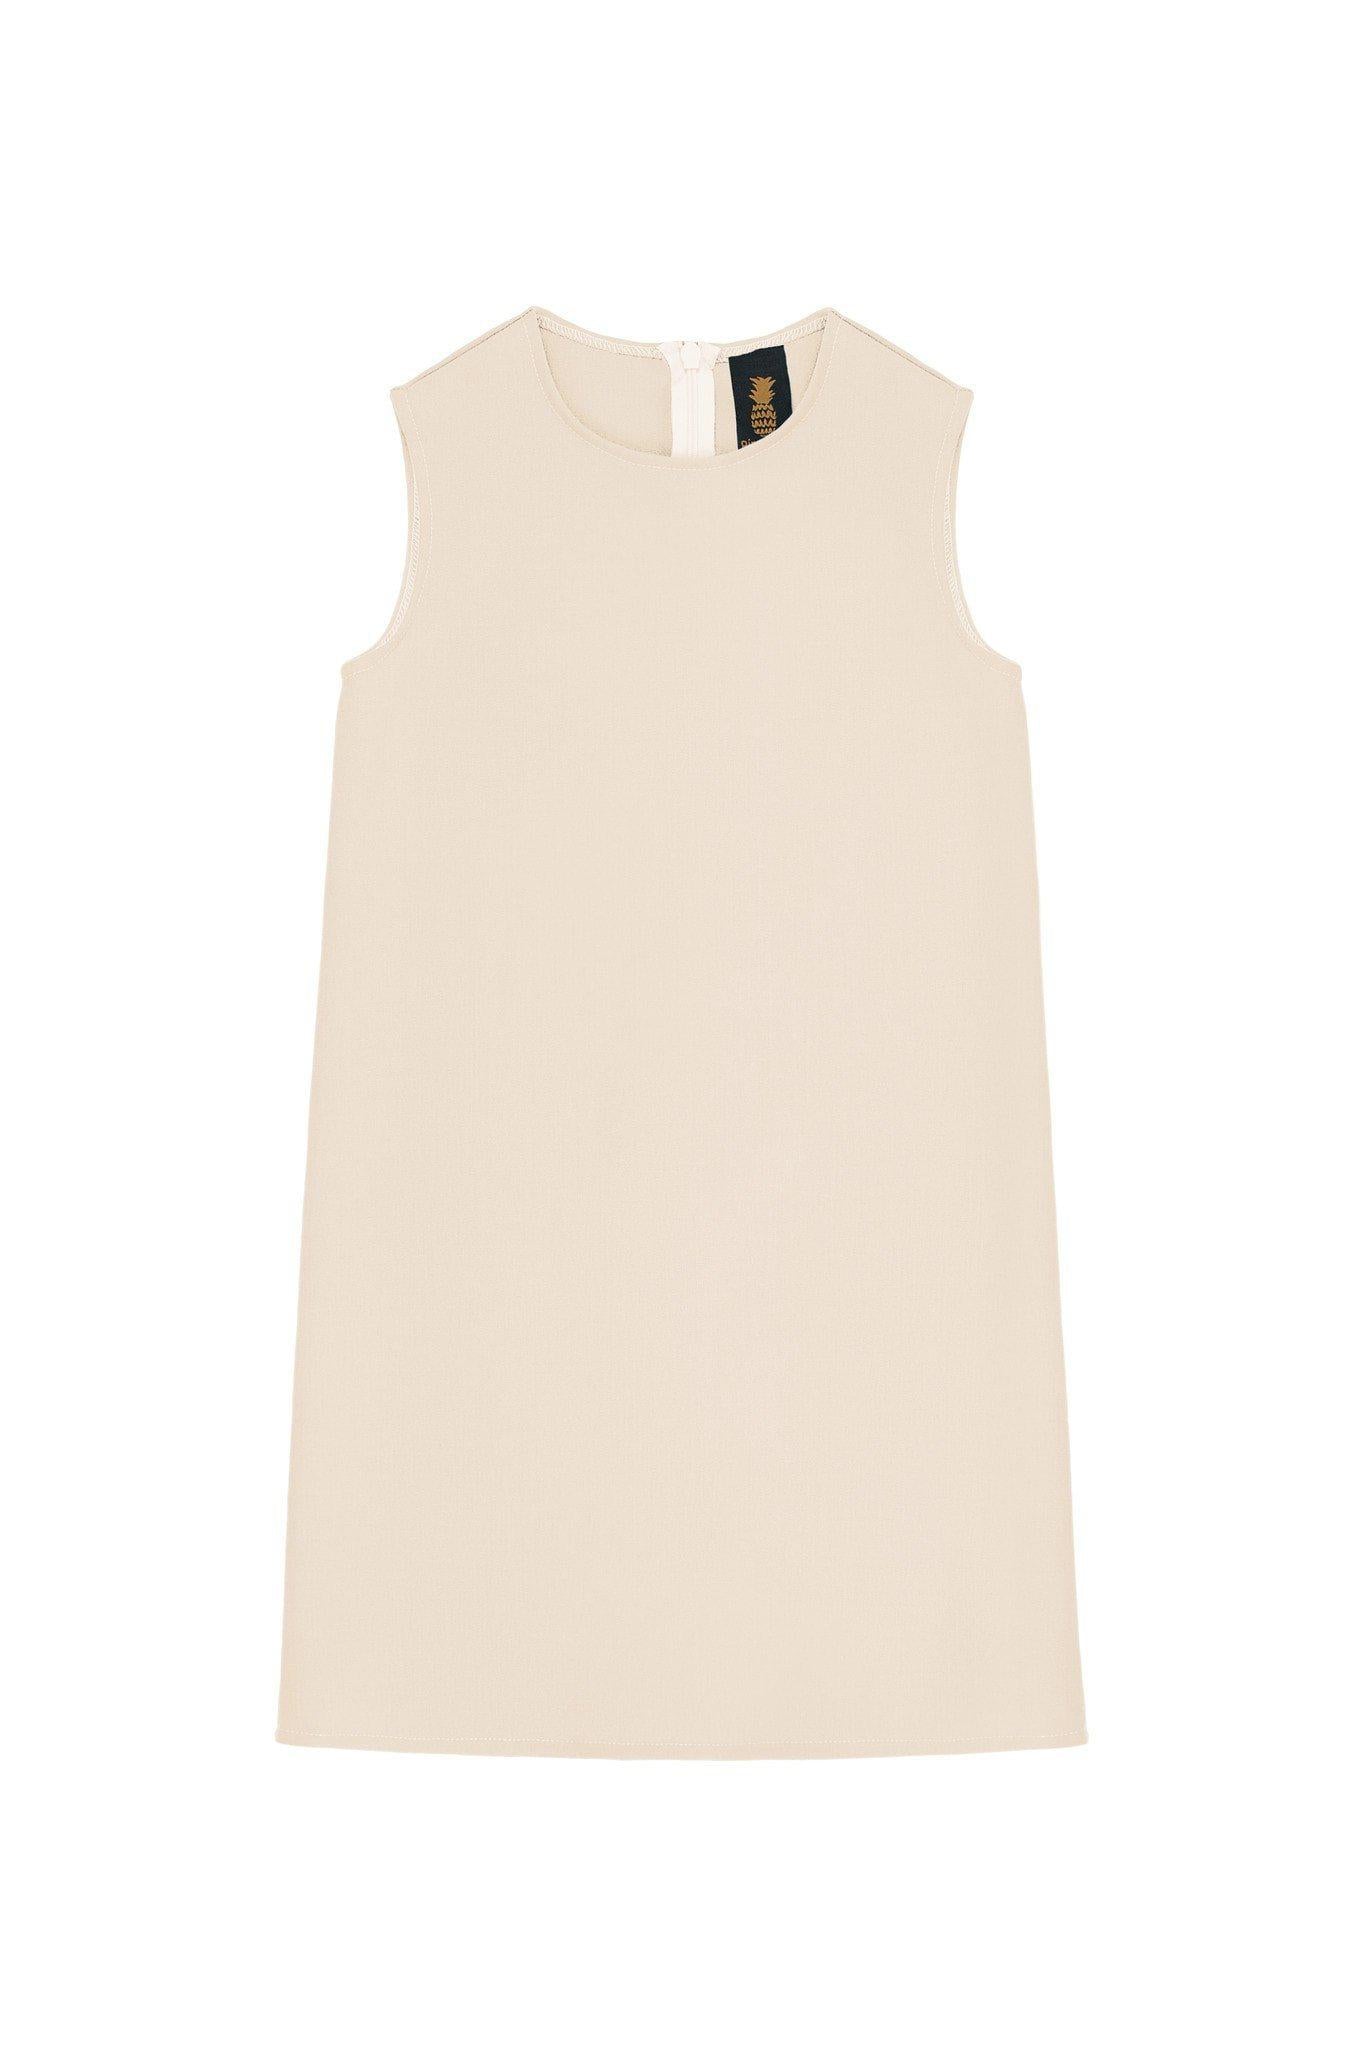 Ivory Beige Stretchy Sleeveless Cute Summer Shift Dress - Girls - Pineapple Clothing